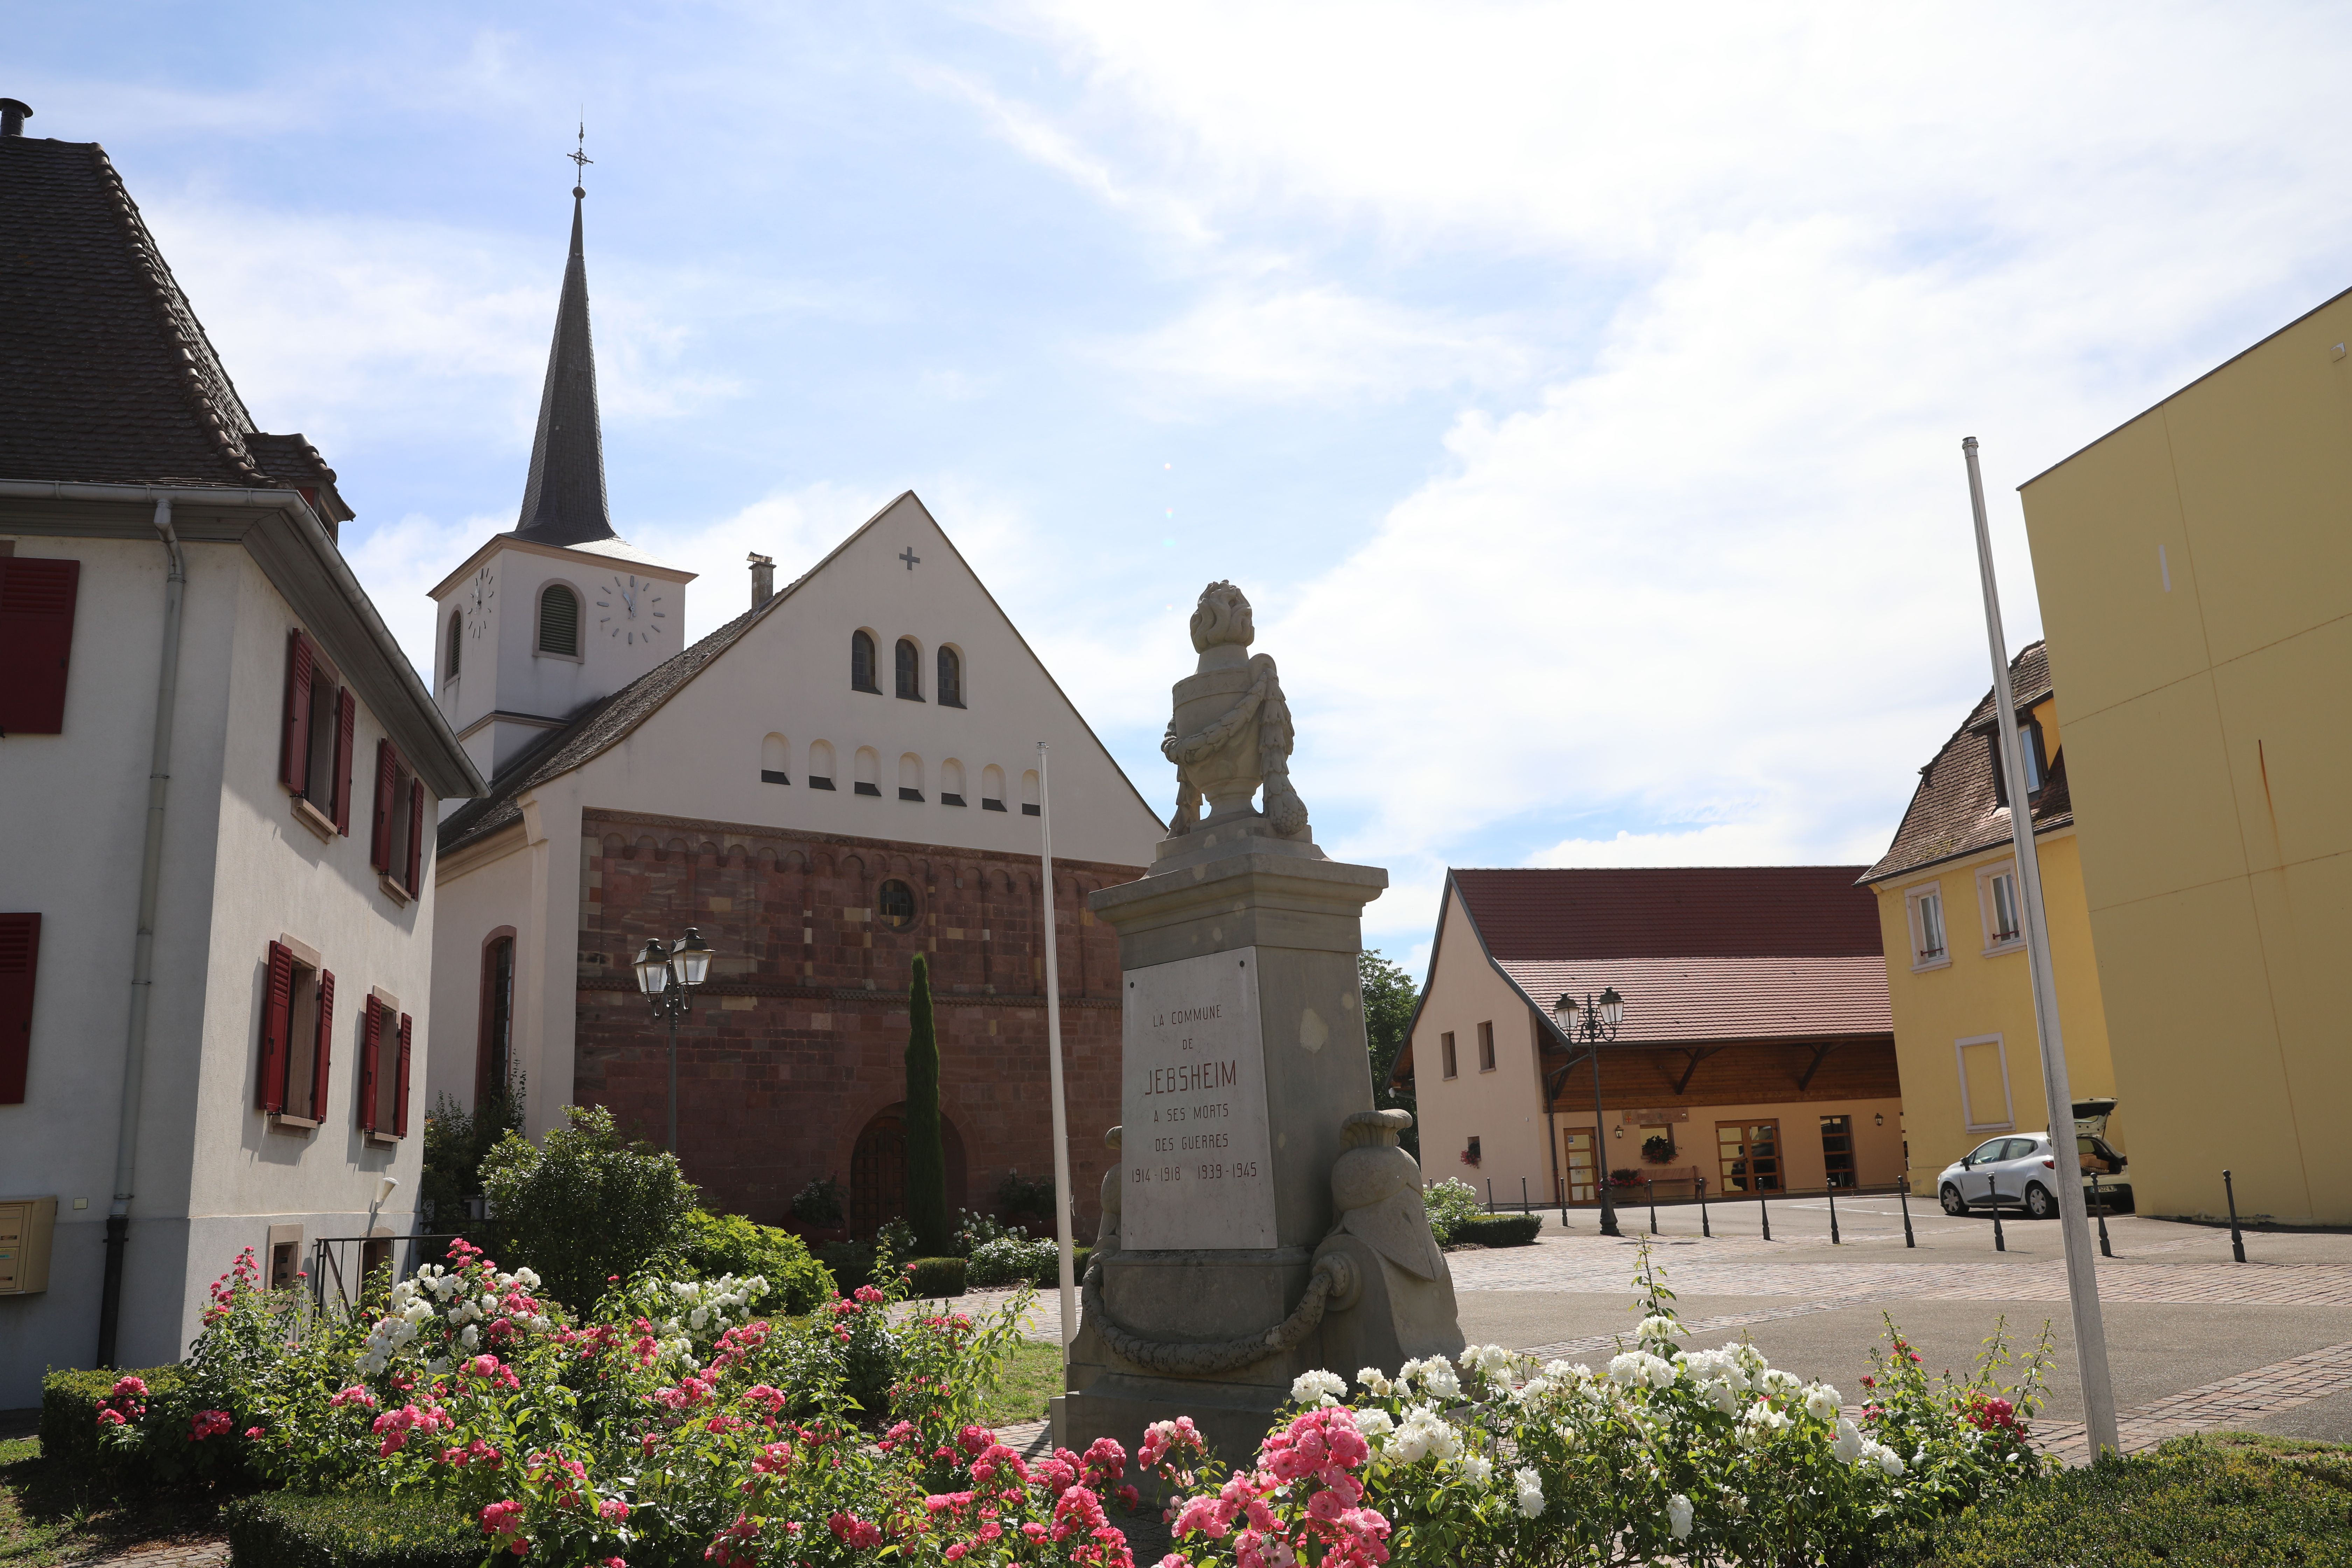 Jebsheim